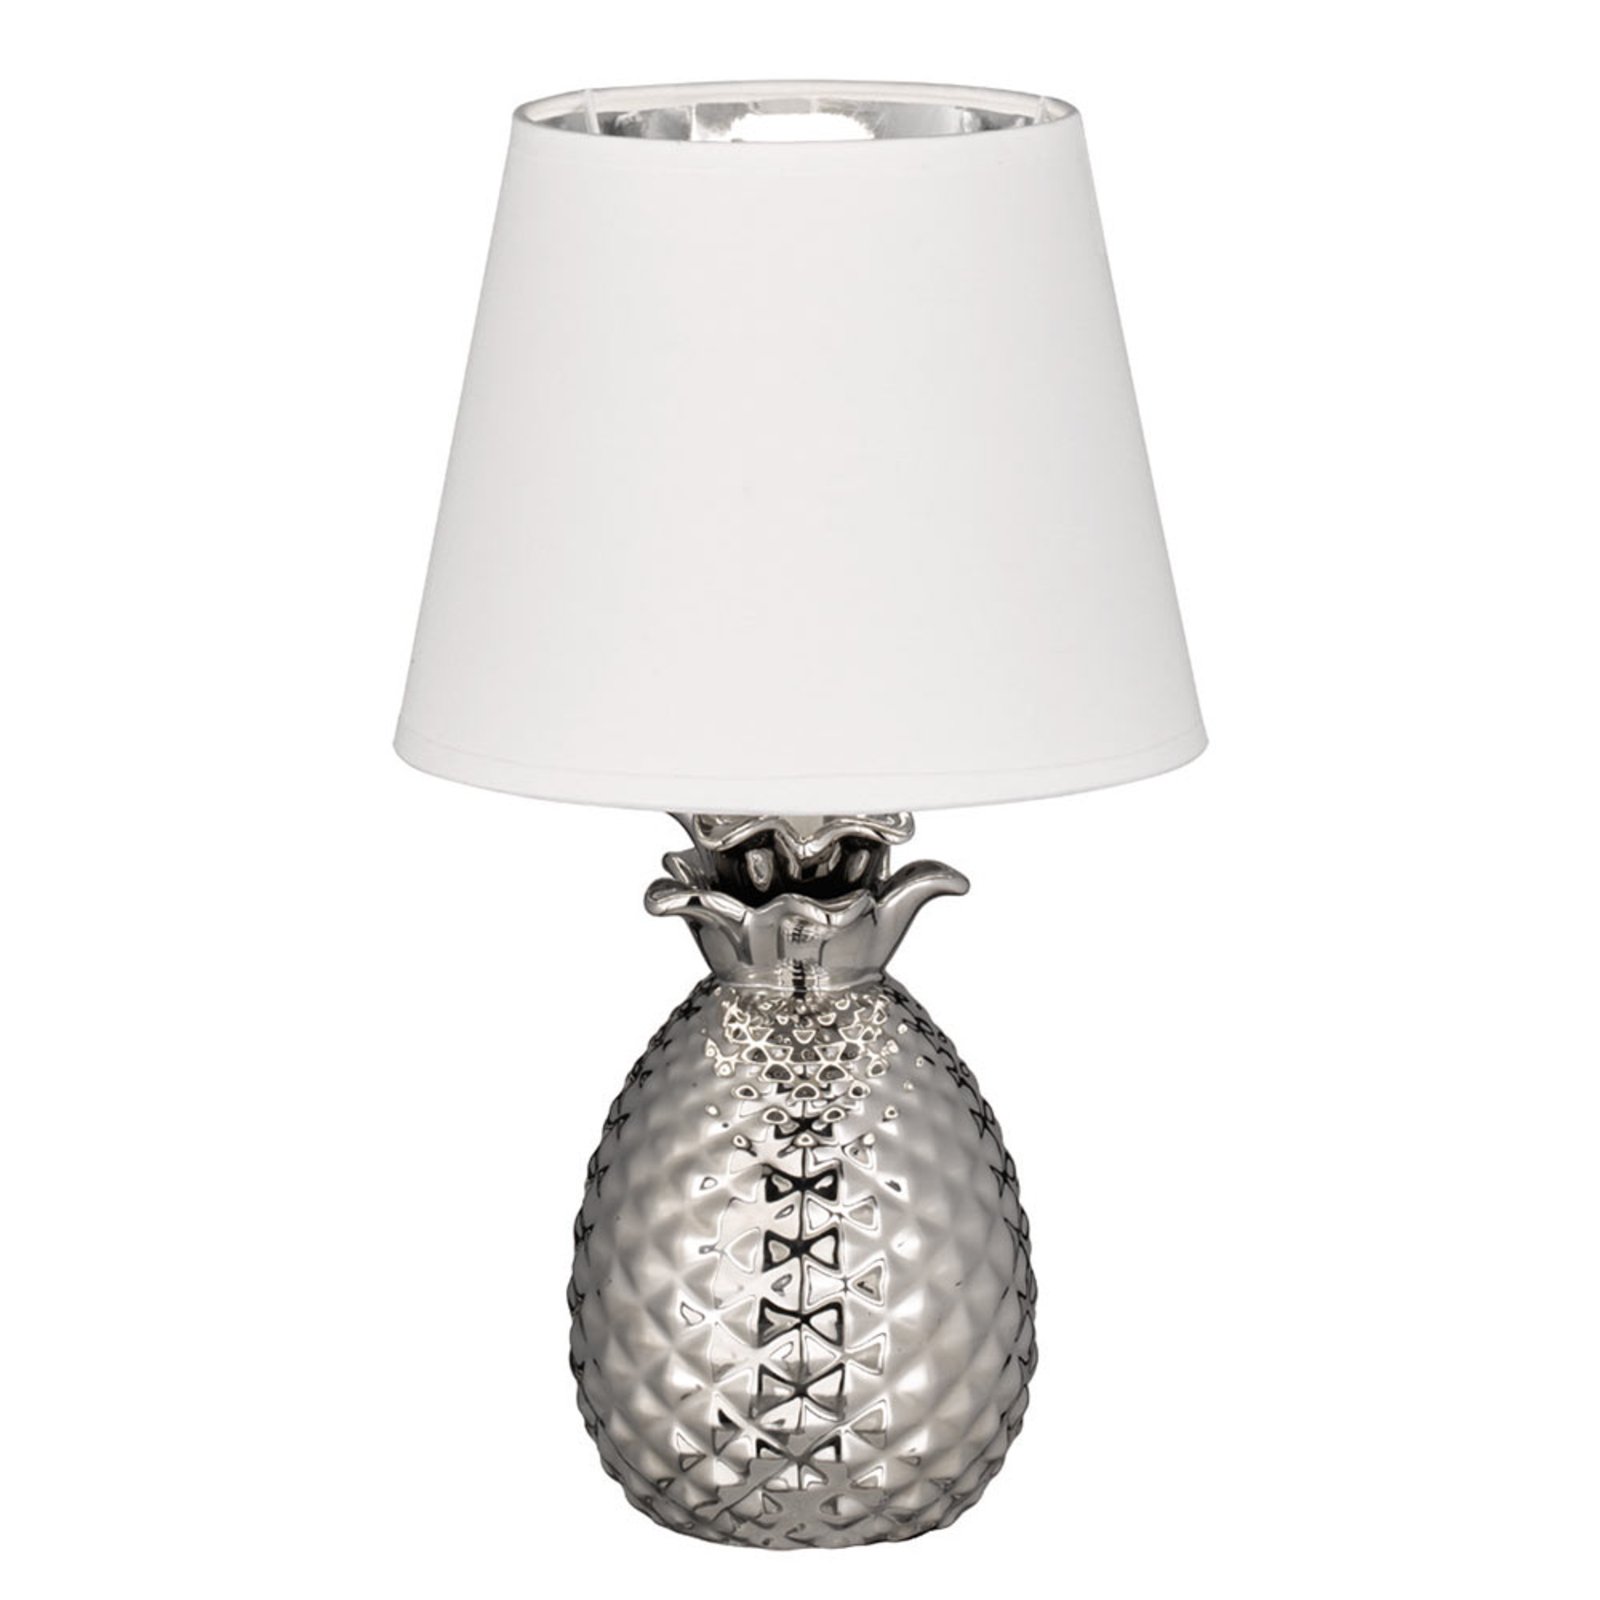 Dekorativ bordlampe Pineapple i keramikk, sølv